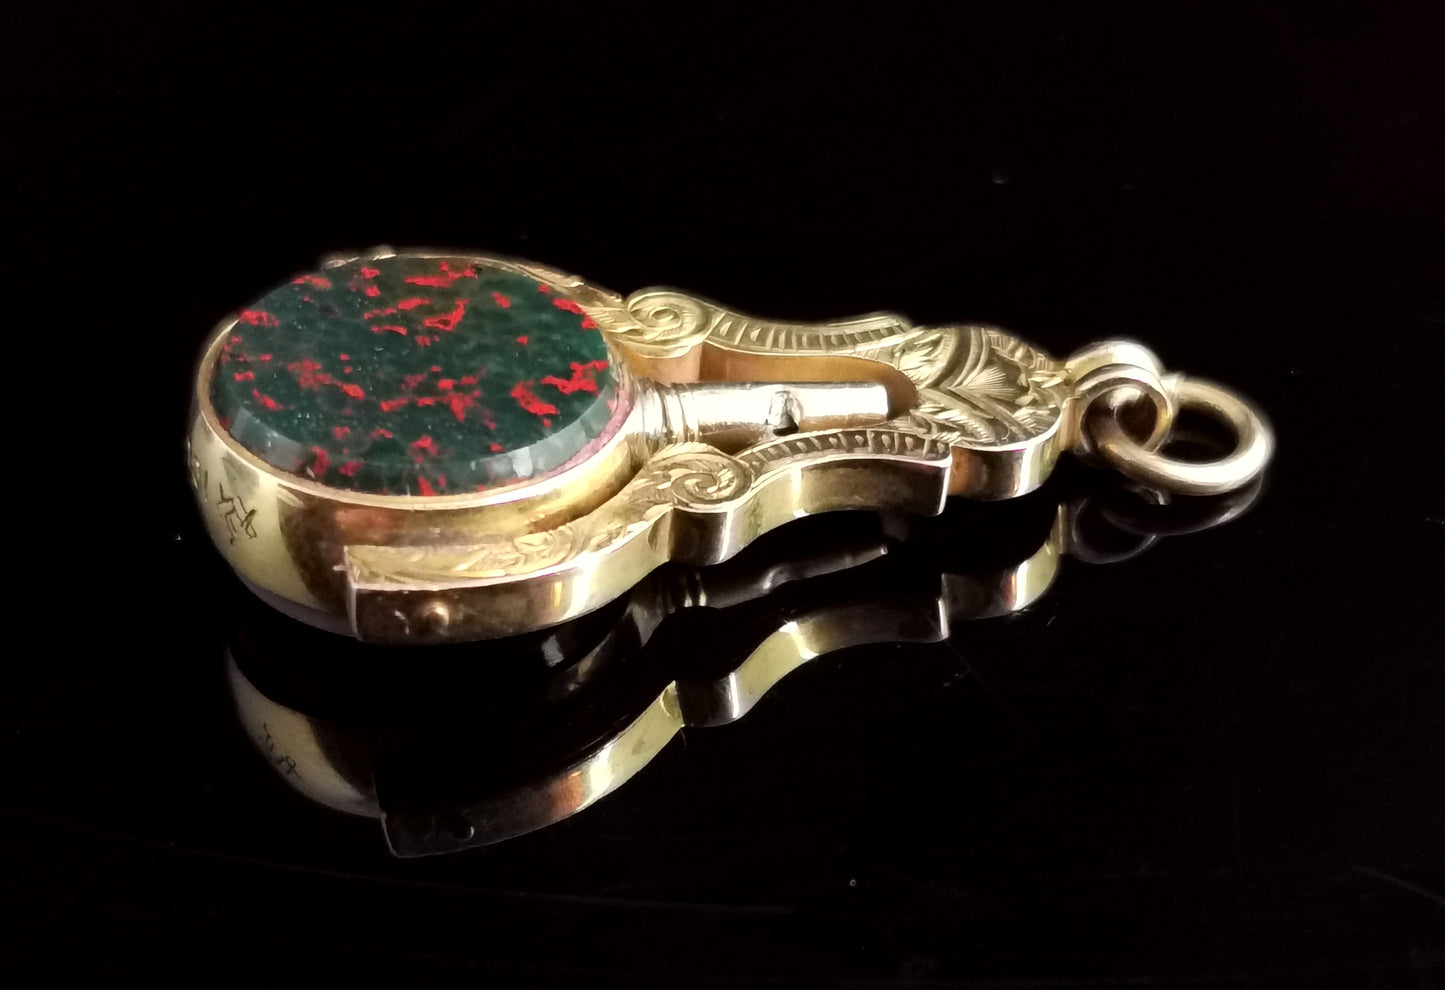 Victorian 9ct gold Watch key seal fob pendant, Masonic, bloodstone and sardonyx